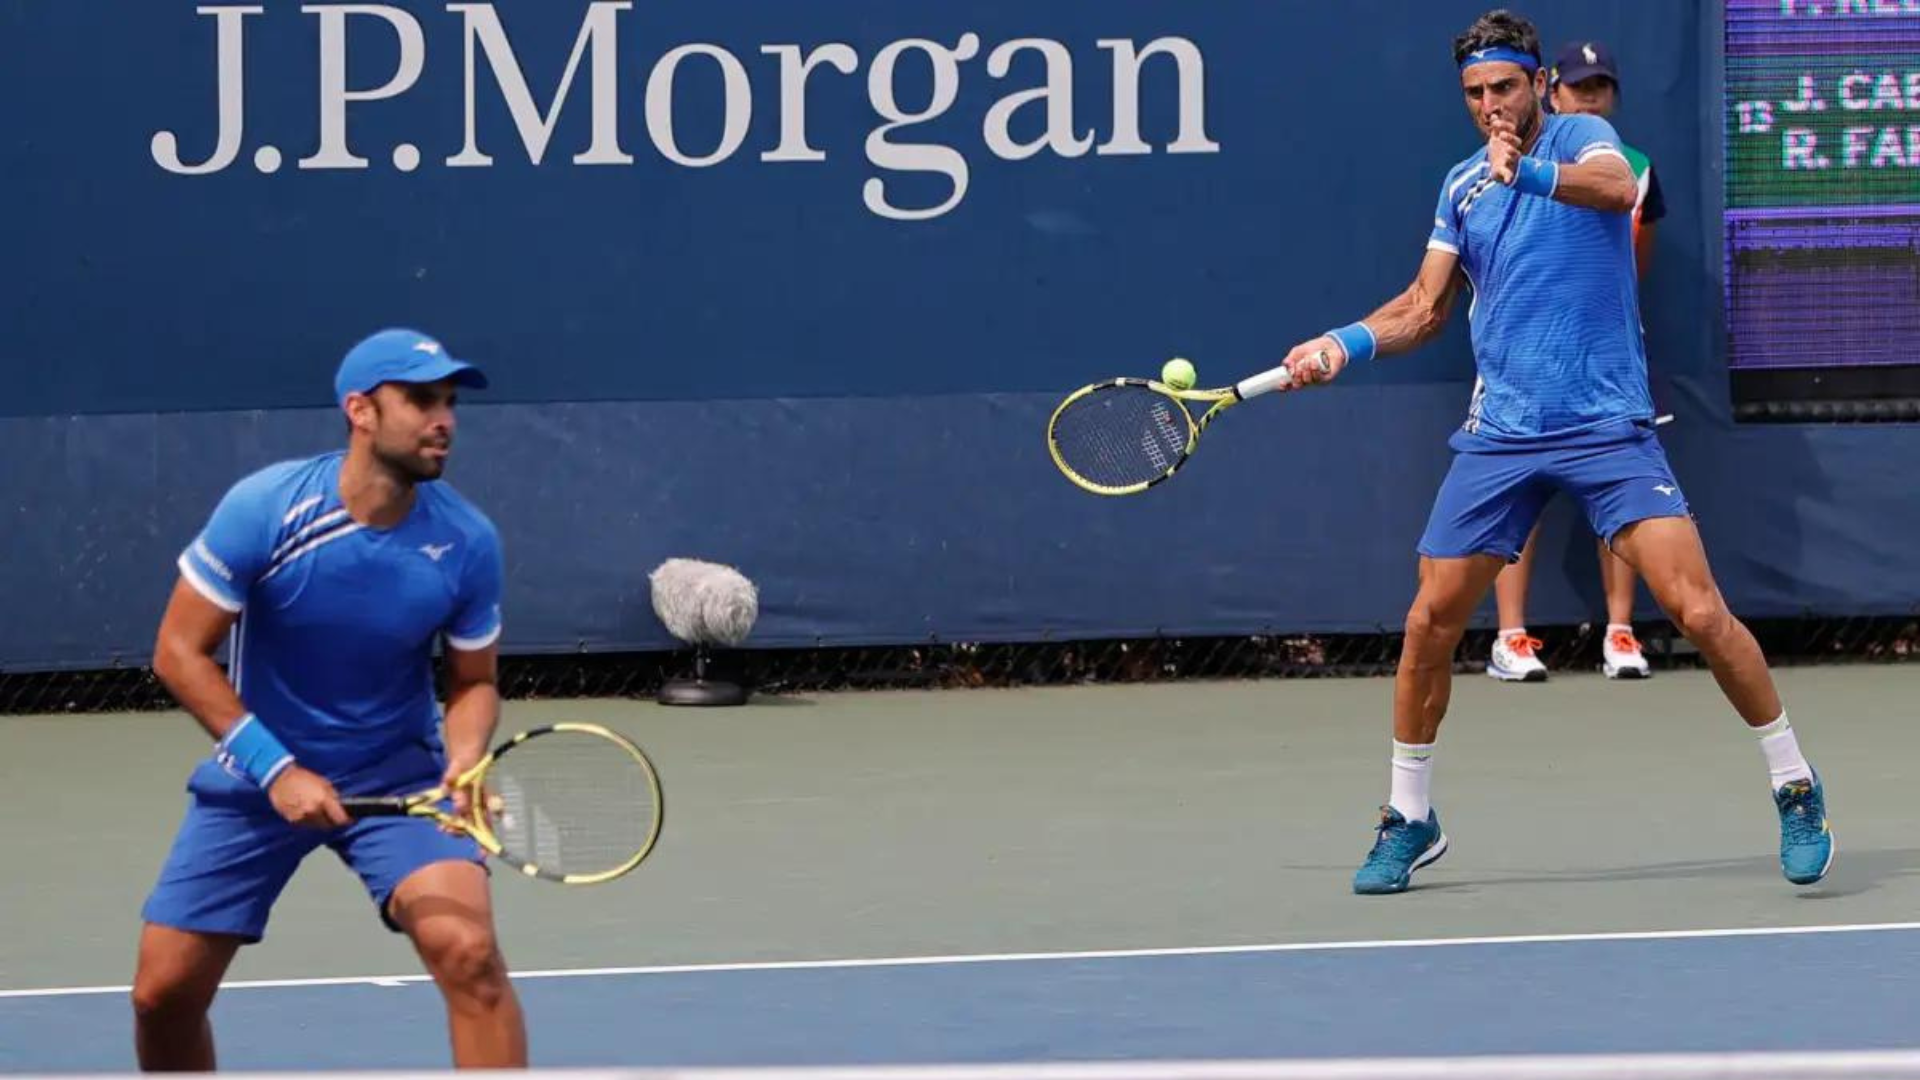 Juan Sebastián Cabal y Robert Farah regresarán al circuito de la ATP en el European Open. Imagen: Impremedia